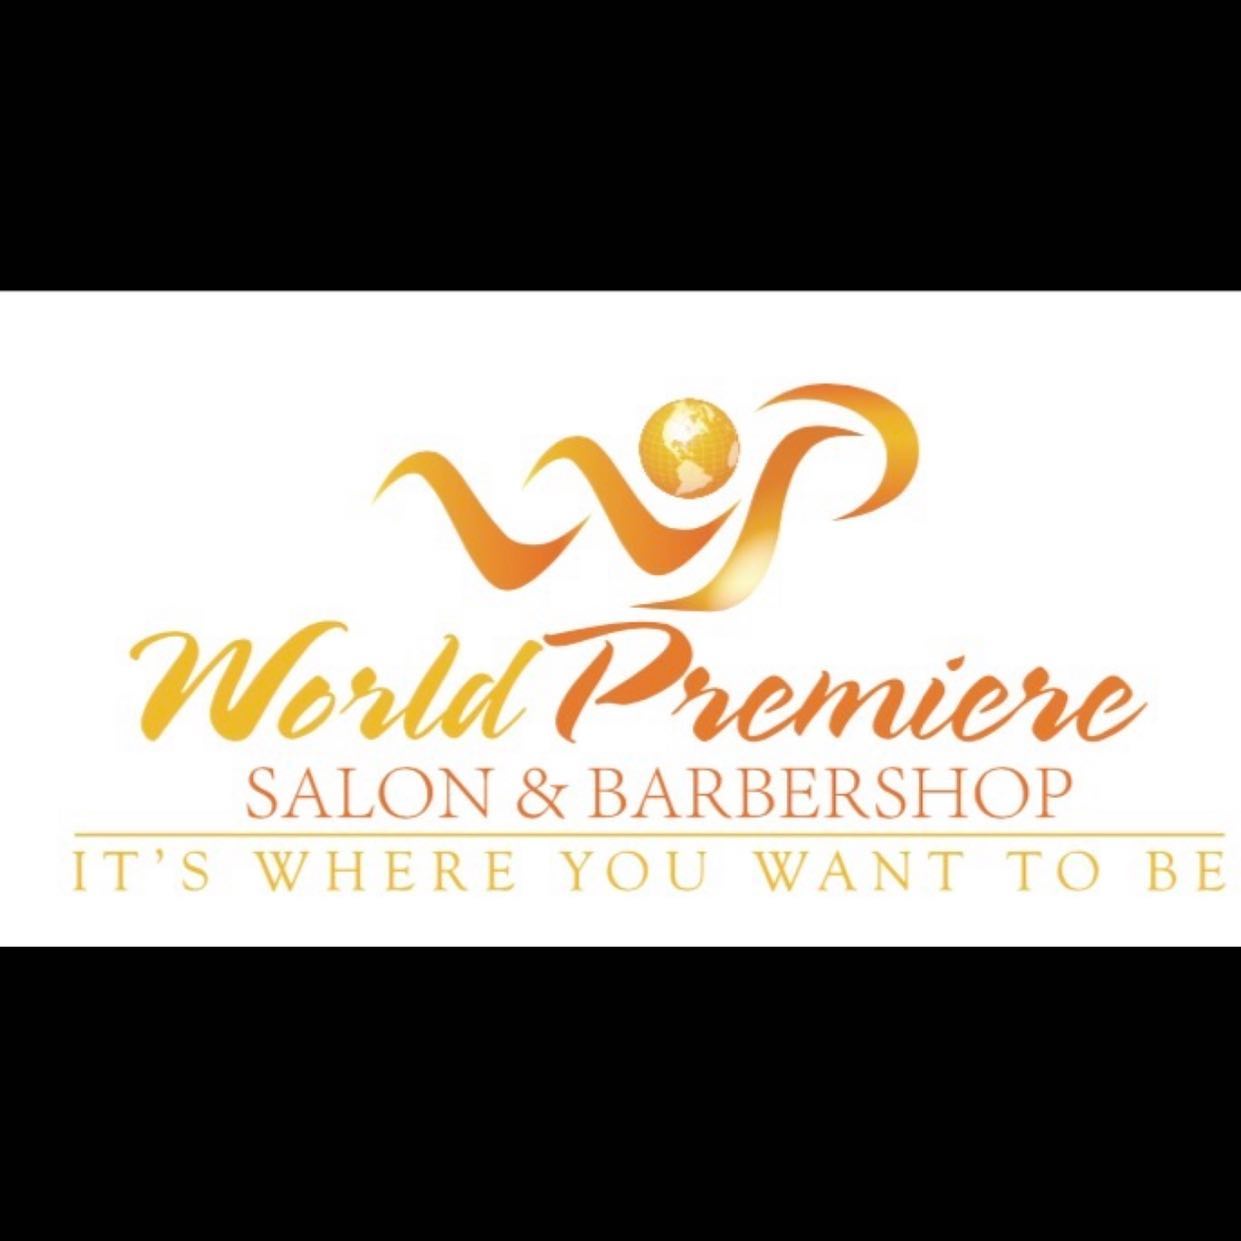 World Premiere Salon & Barbershop